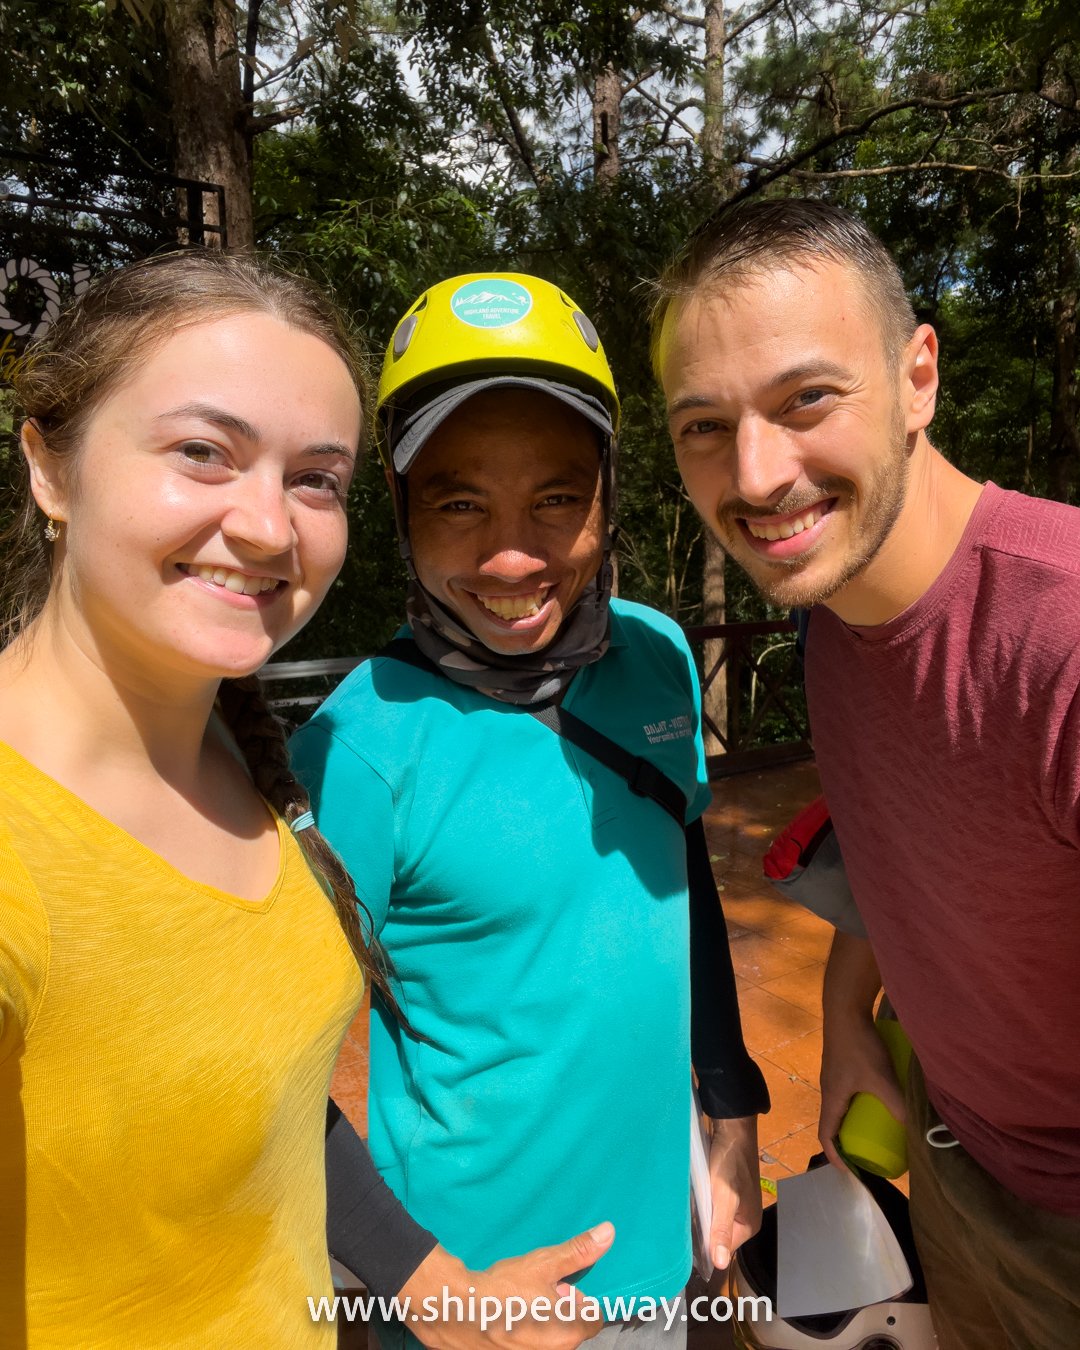 Arijana Tkalcec, Matej Span and the fun guide Ya after Canyoning in Da Lat, Vietnam